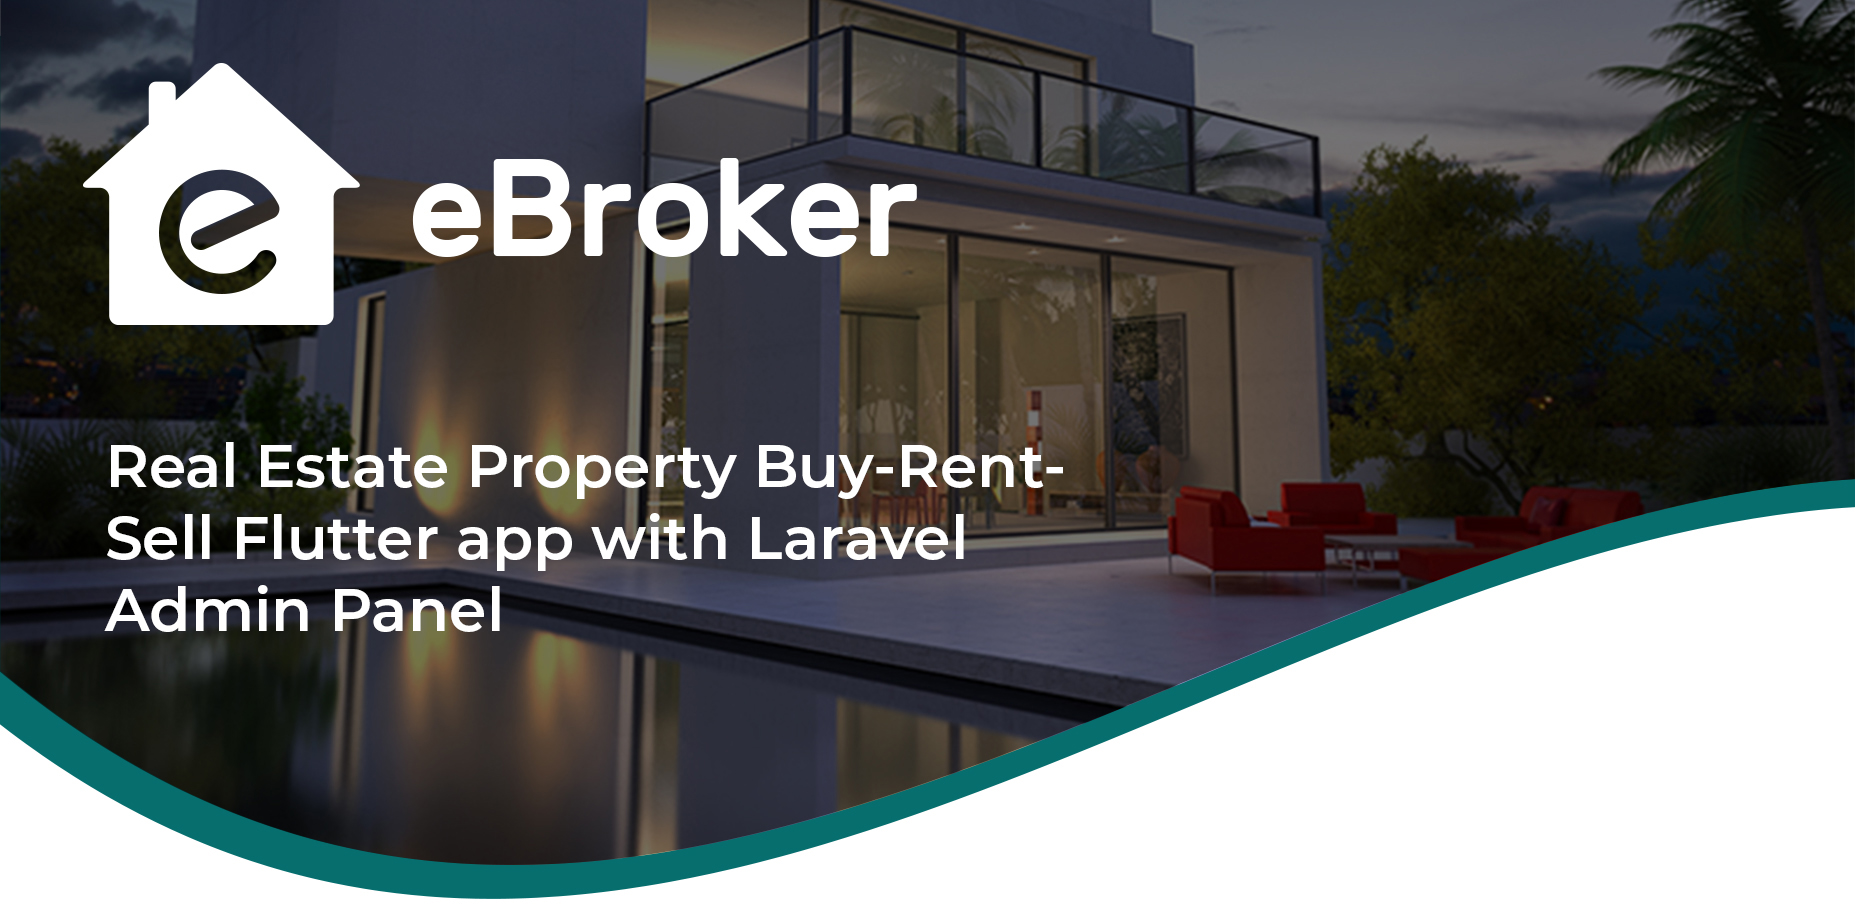 eBroker - Real Estate Property Buy-Rent-Sell Flutter app with Laravel Admin Panel - 6